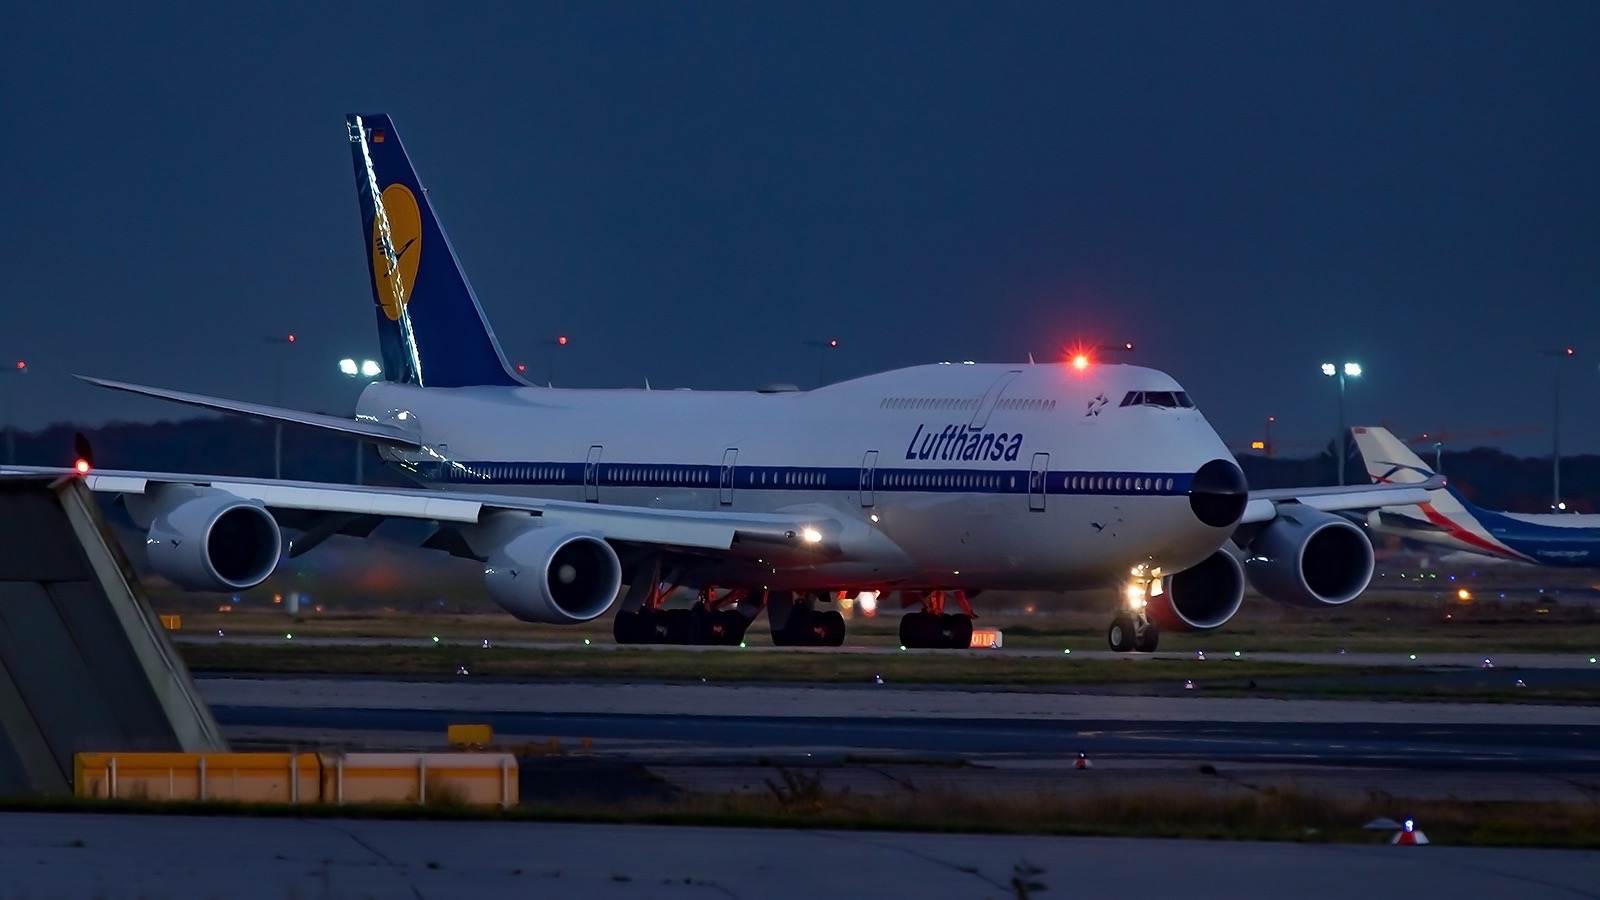 Frankfurt Flughafen LineUp 18 @Night Lufthansa Boeing 747-8 70s Retro color